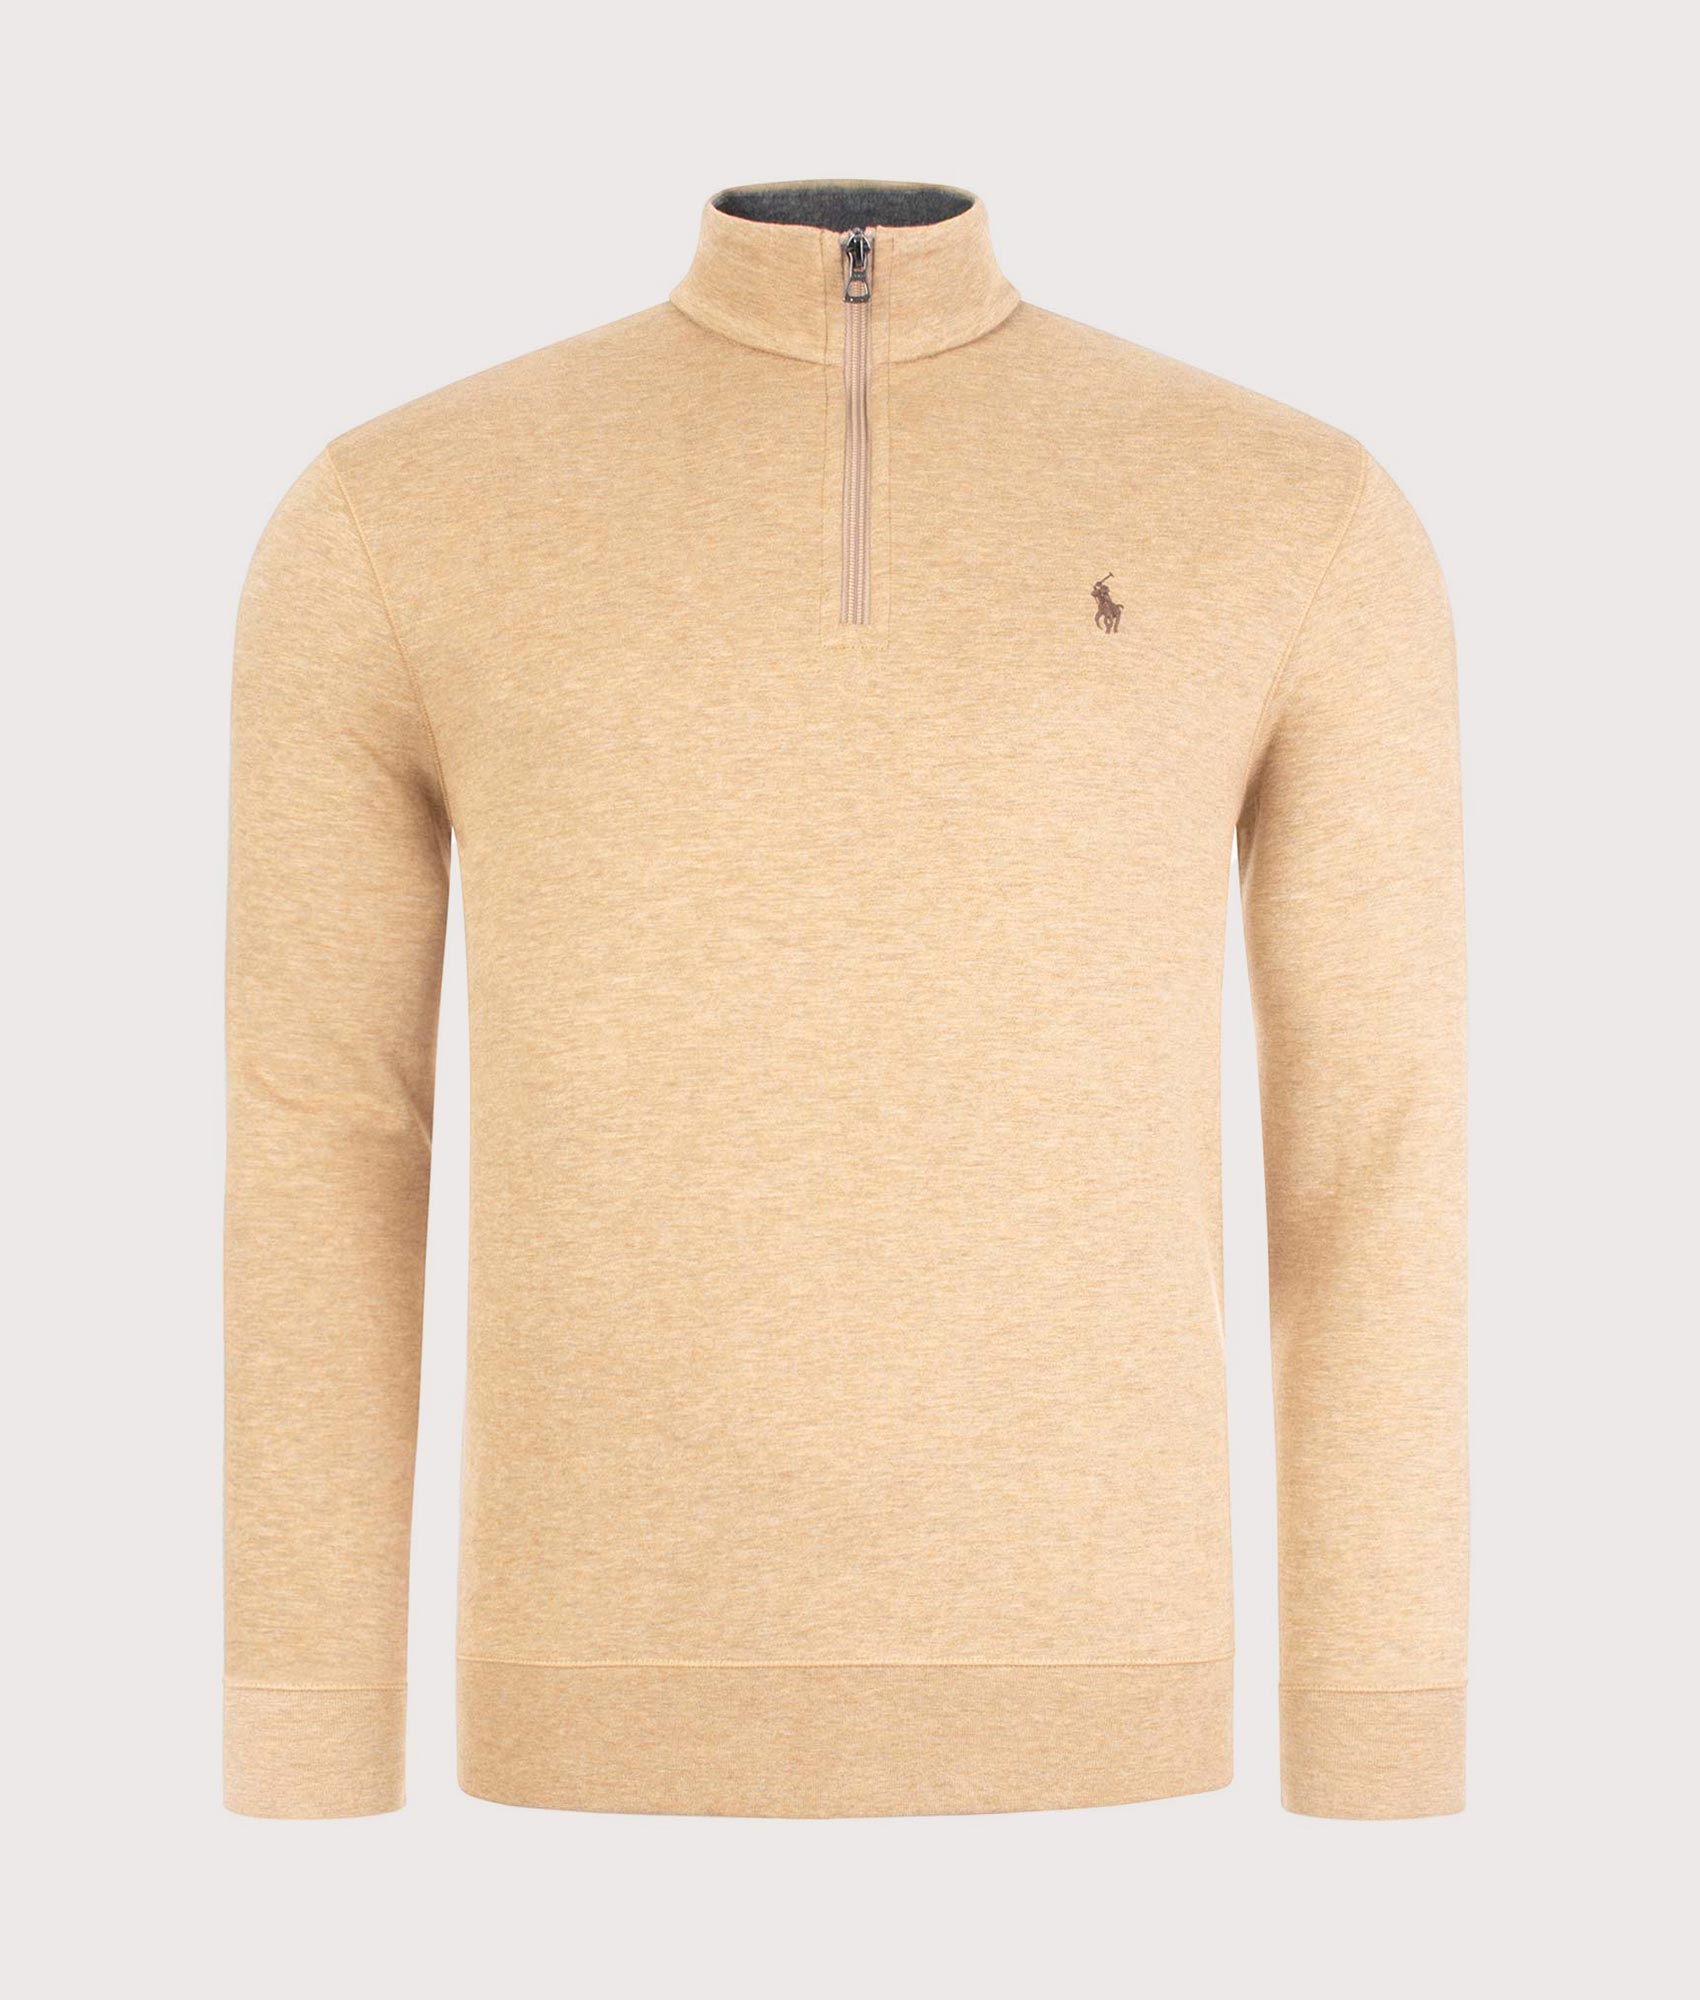 Polo Ralph Lauren Mens Quarter Zip Sweatshirt - Colour: 024 Luxury Tan Heather - Size: Large